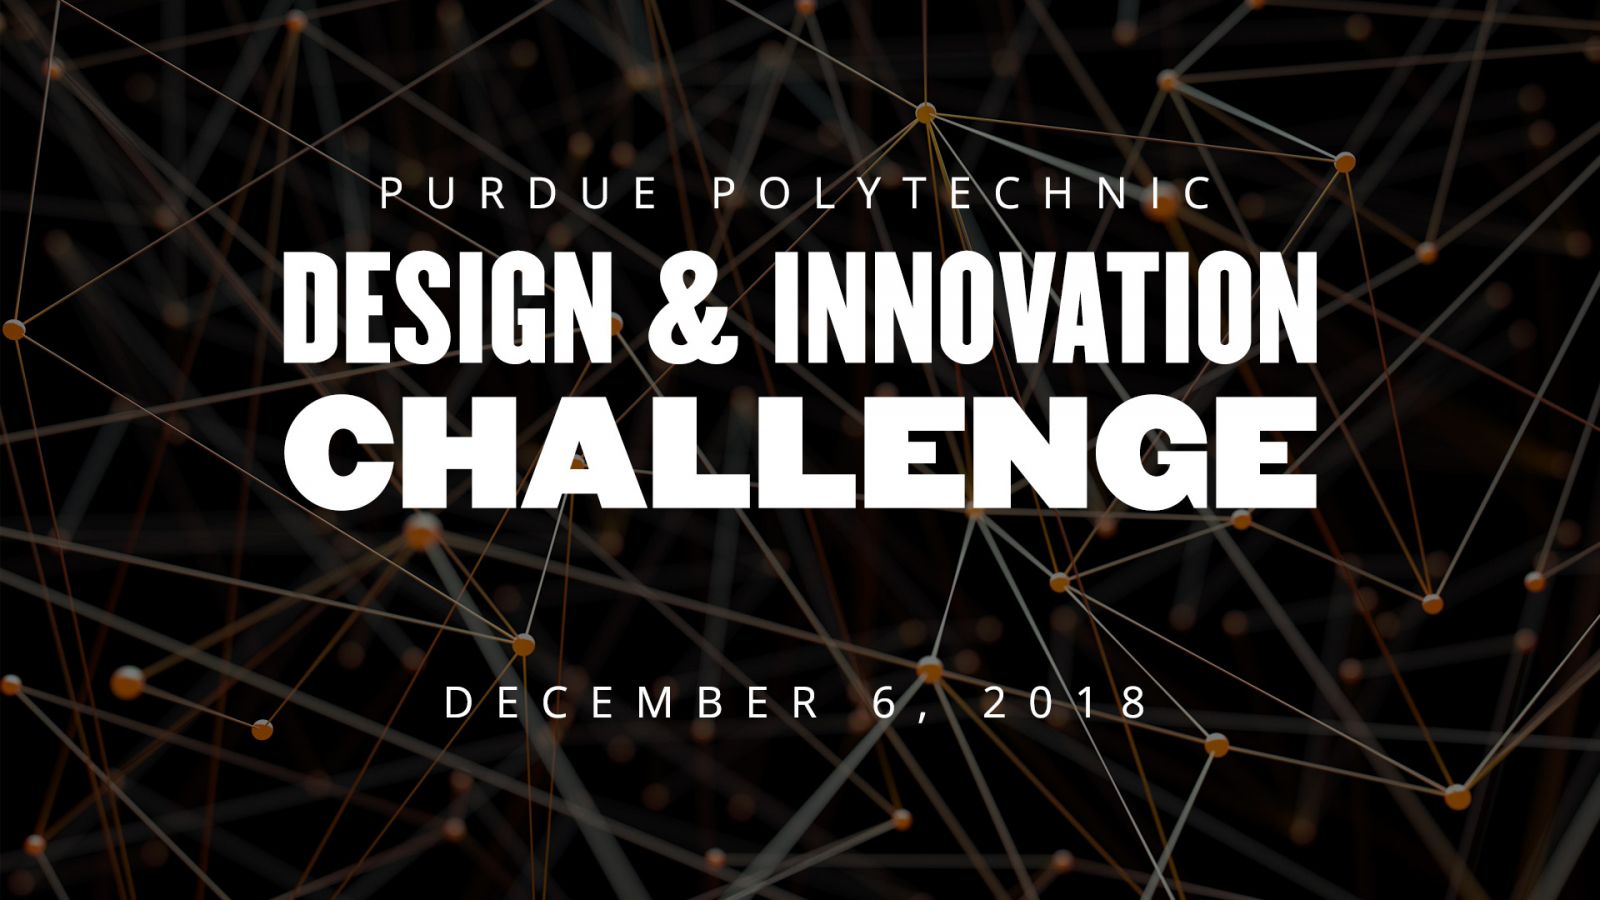 Purdue Polytechnic Design & Innovation Challenge